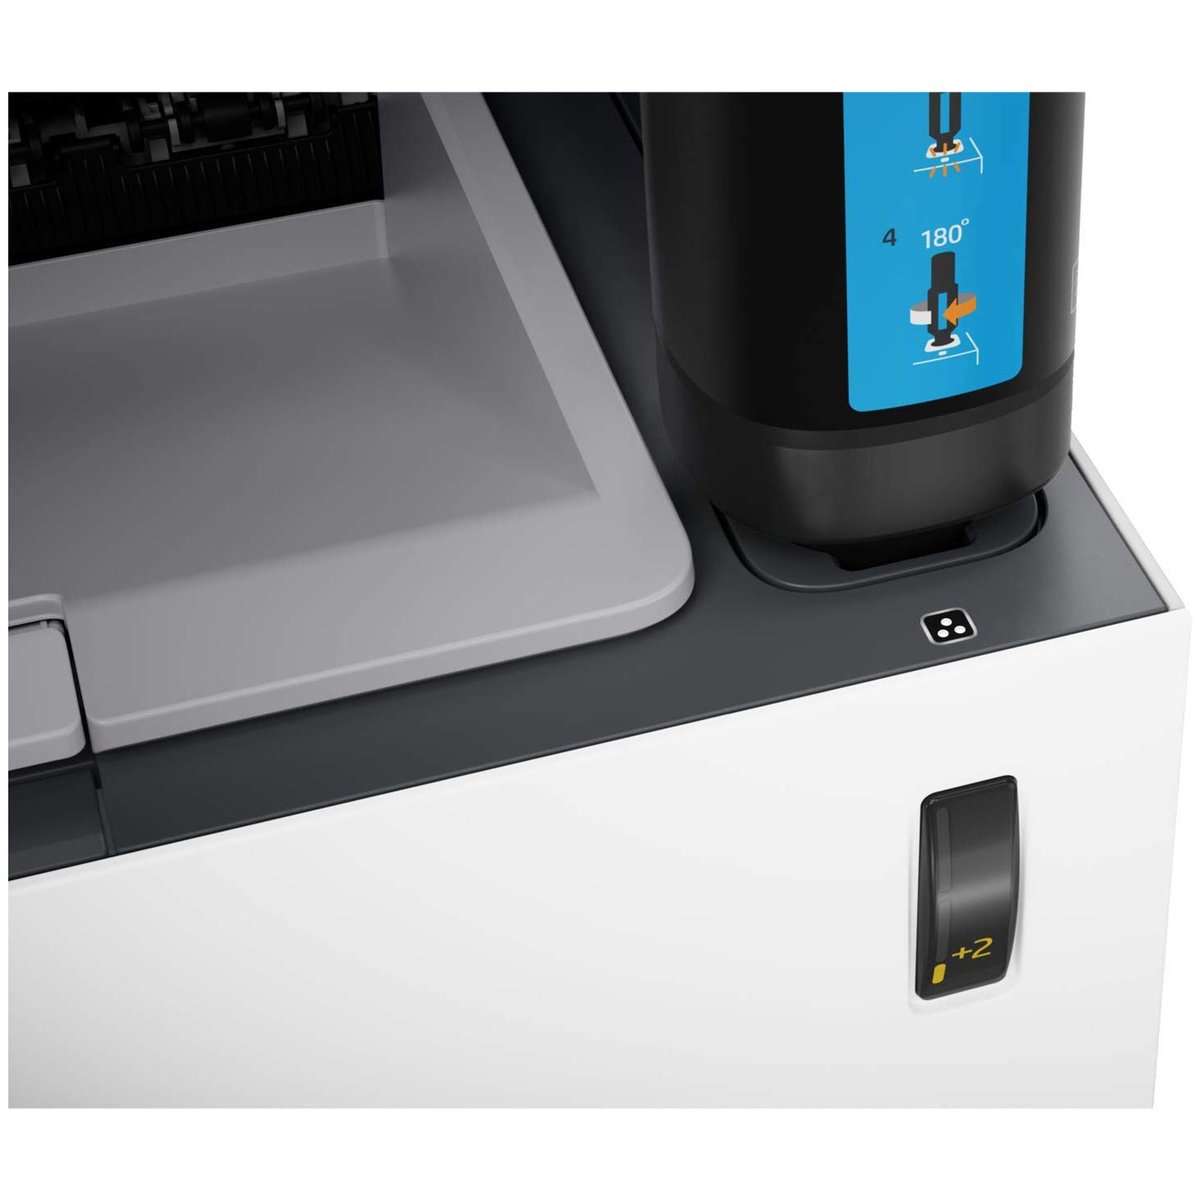 HP Neverstop Laser 1000w Printer (4RY23A),White